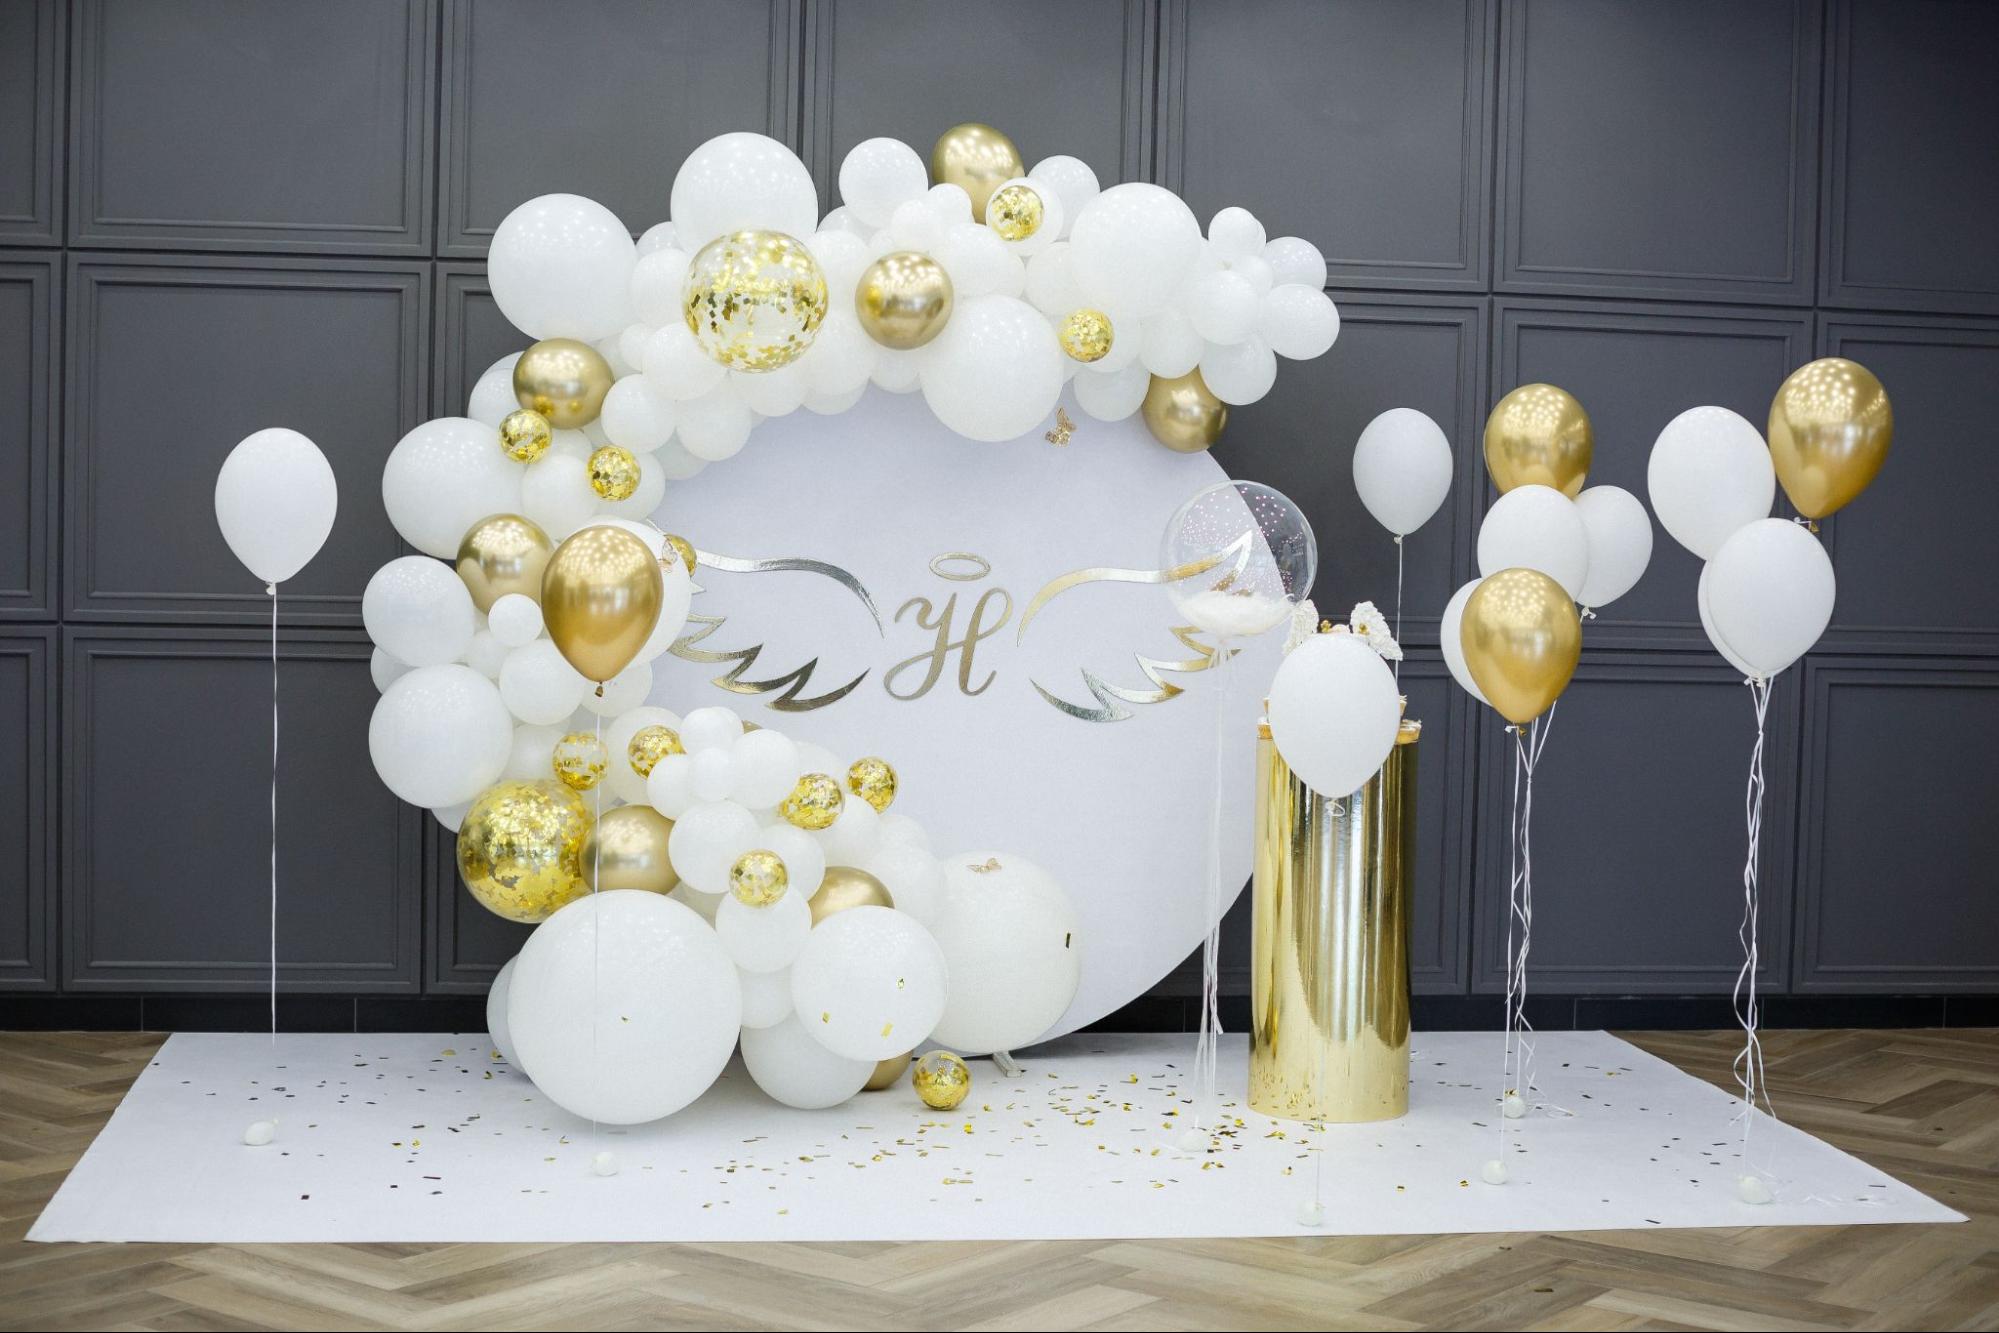 Balloon Backdrop: Vibrant home decor for birthday celebrations